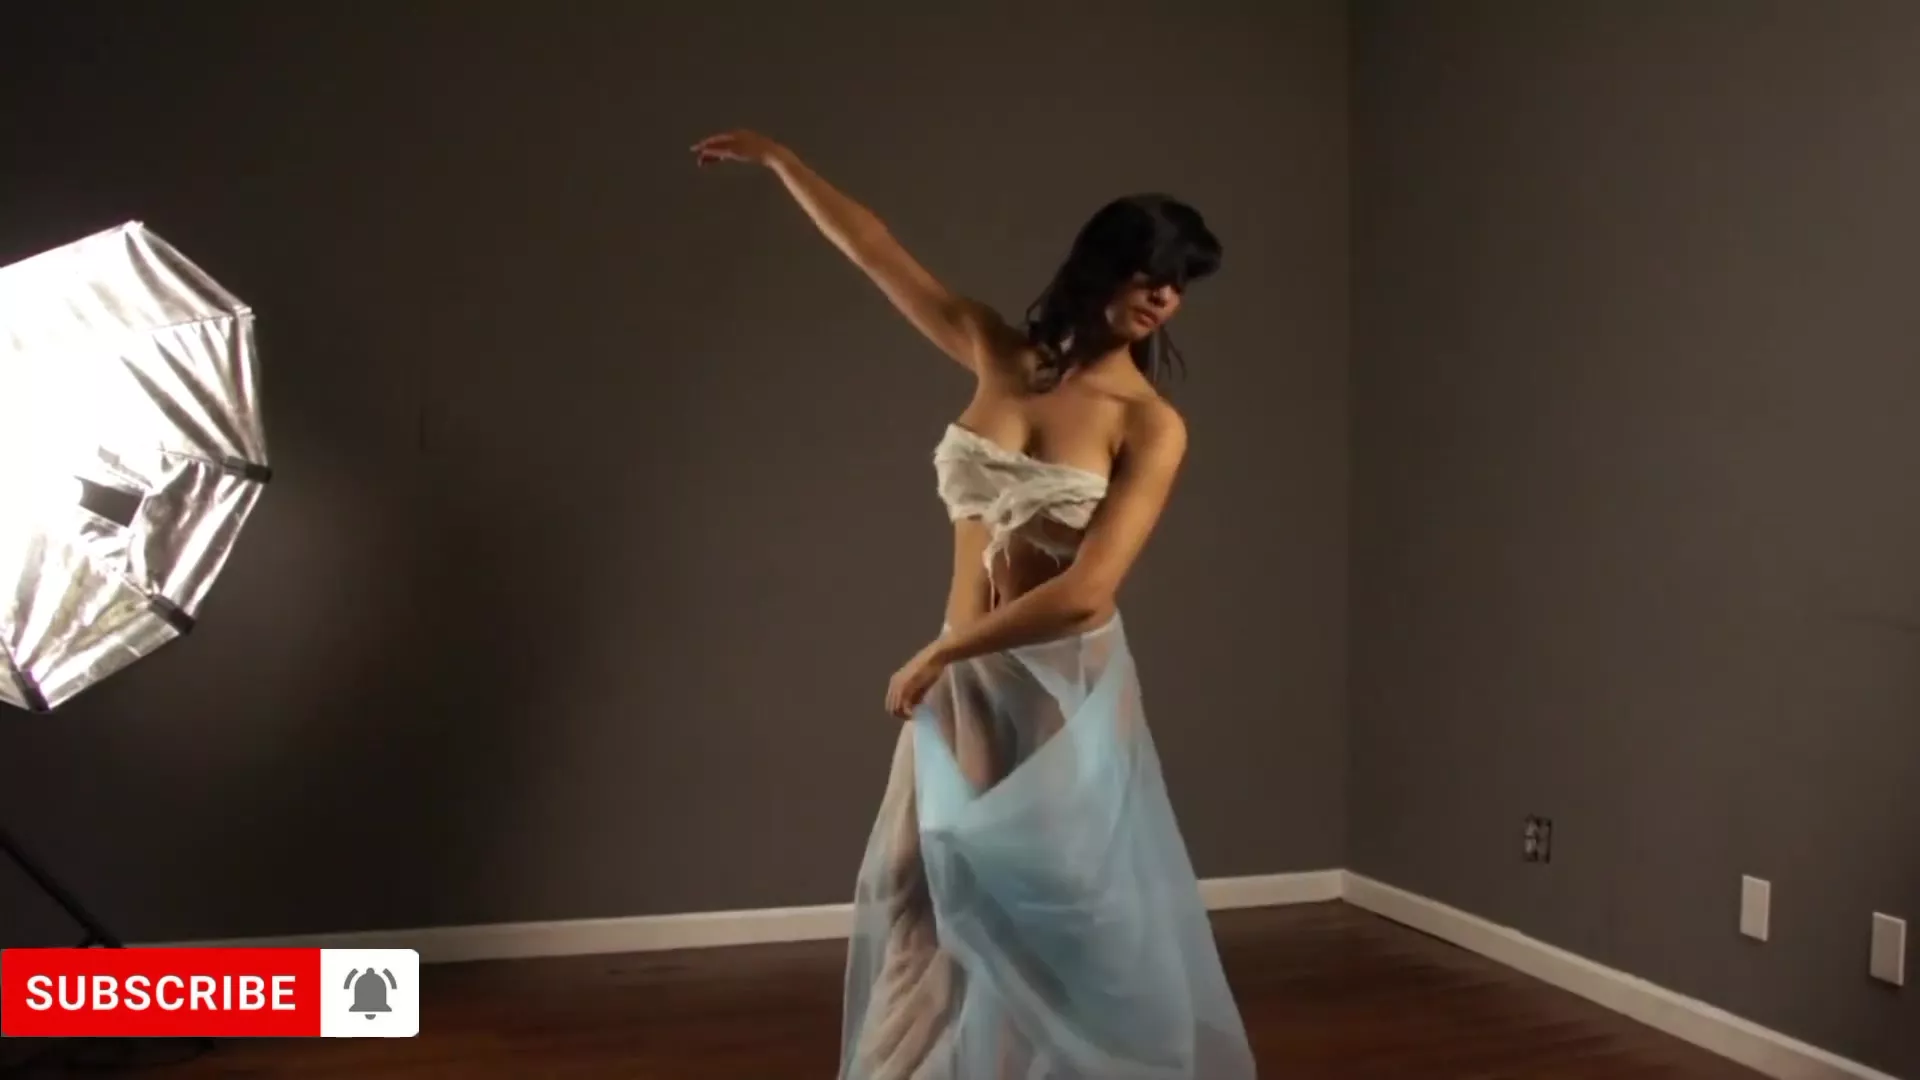 Shanaya abigail nude video